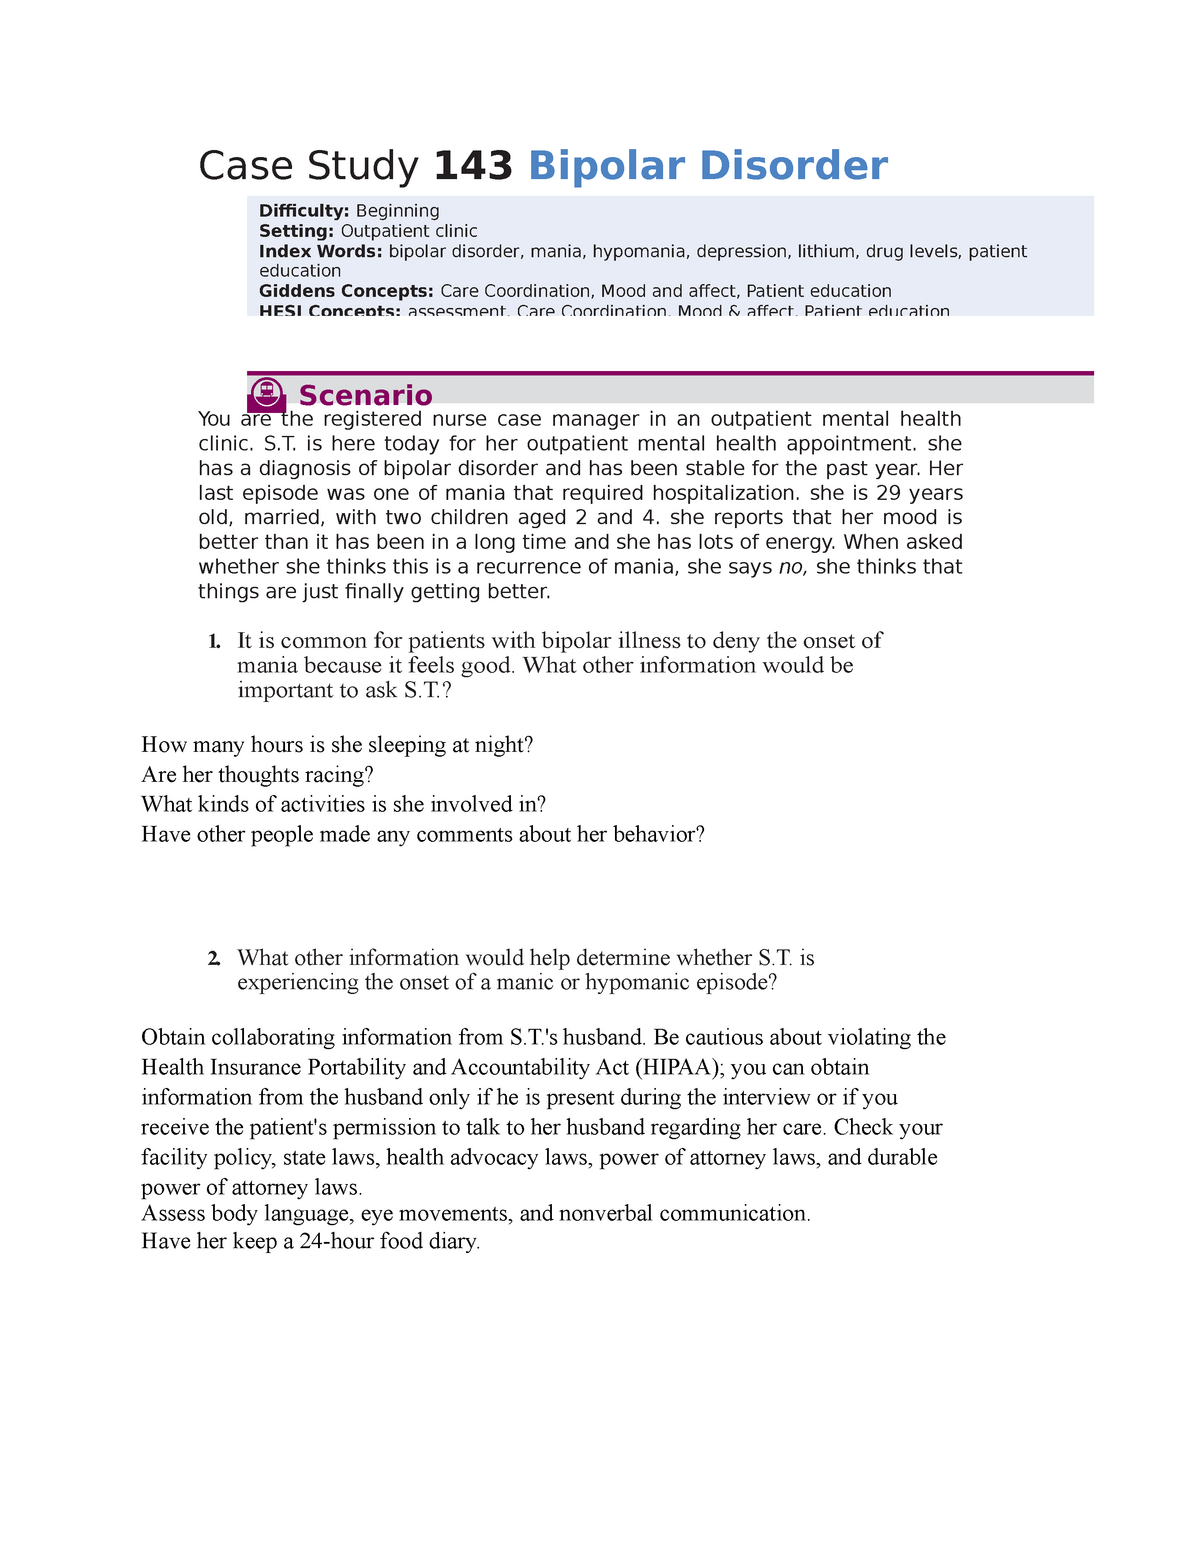 bipolar disorder case study pdf